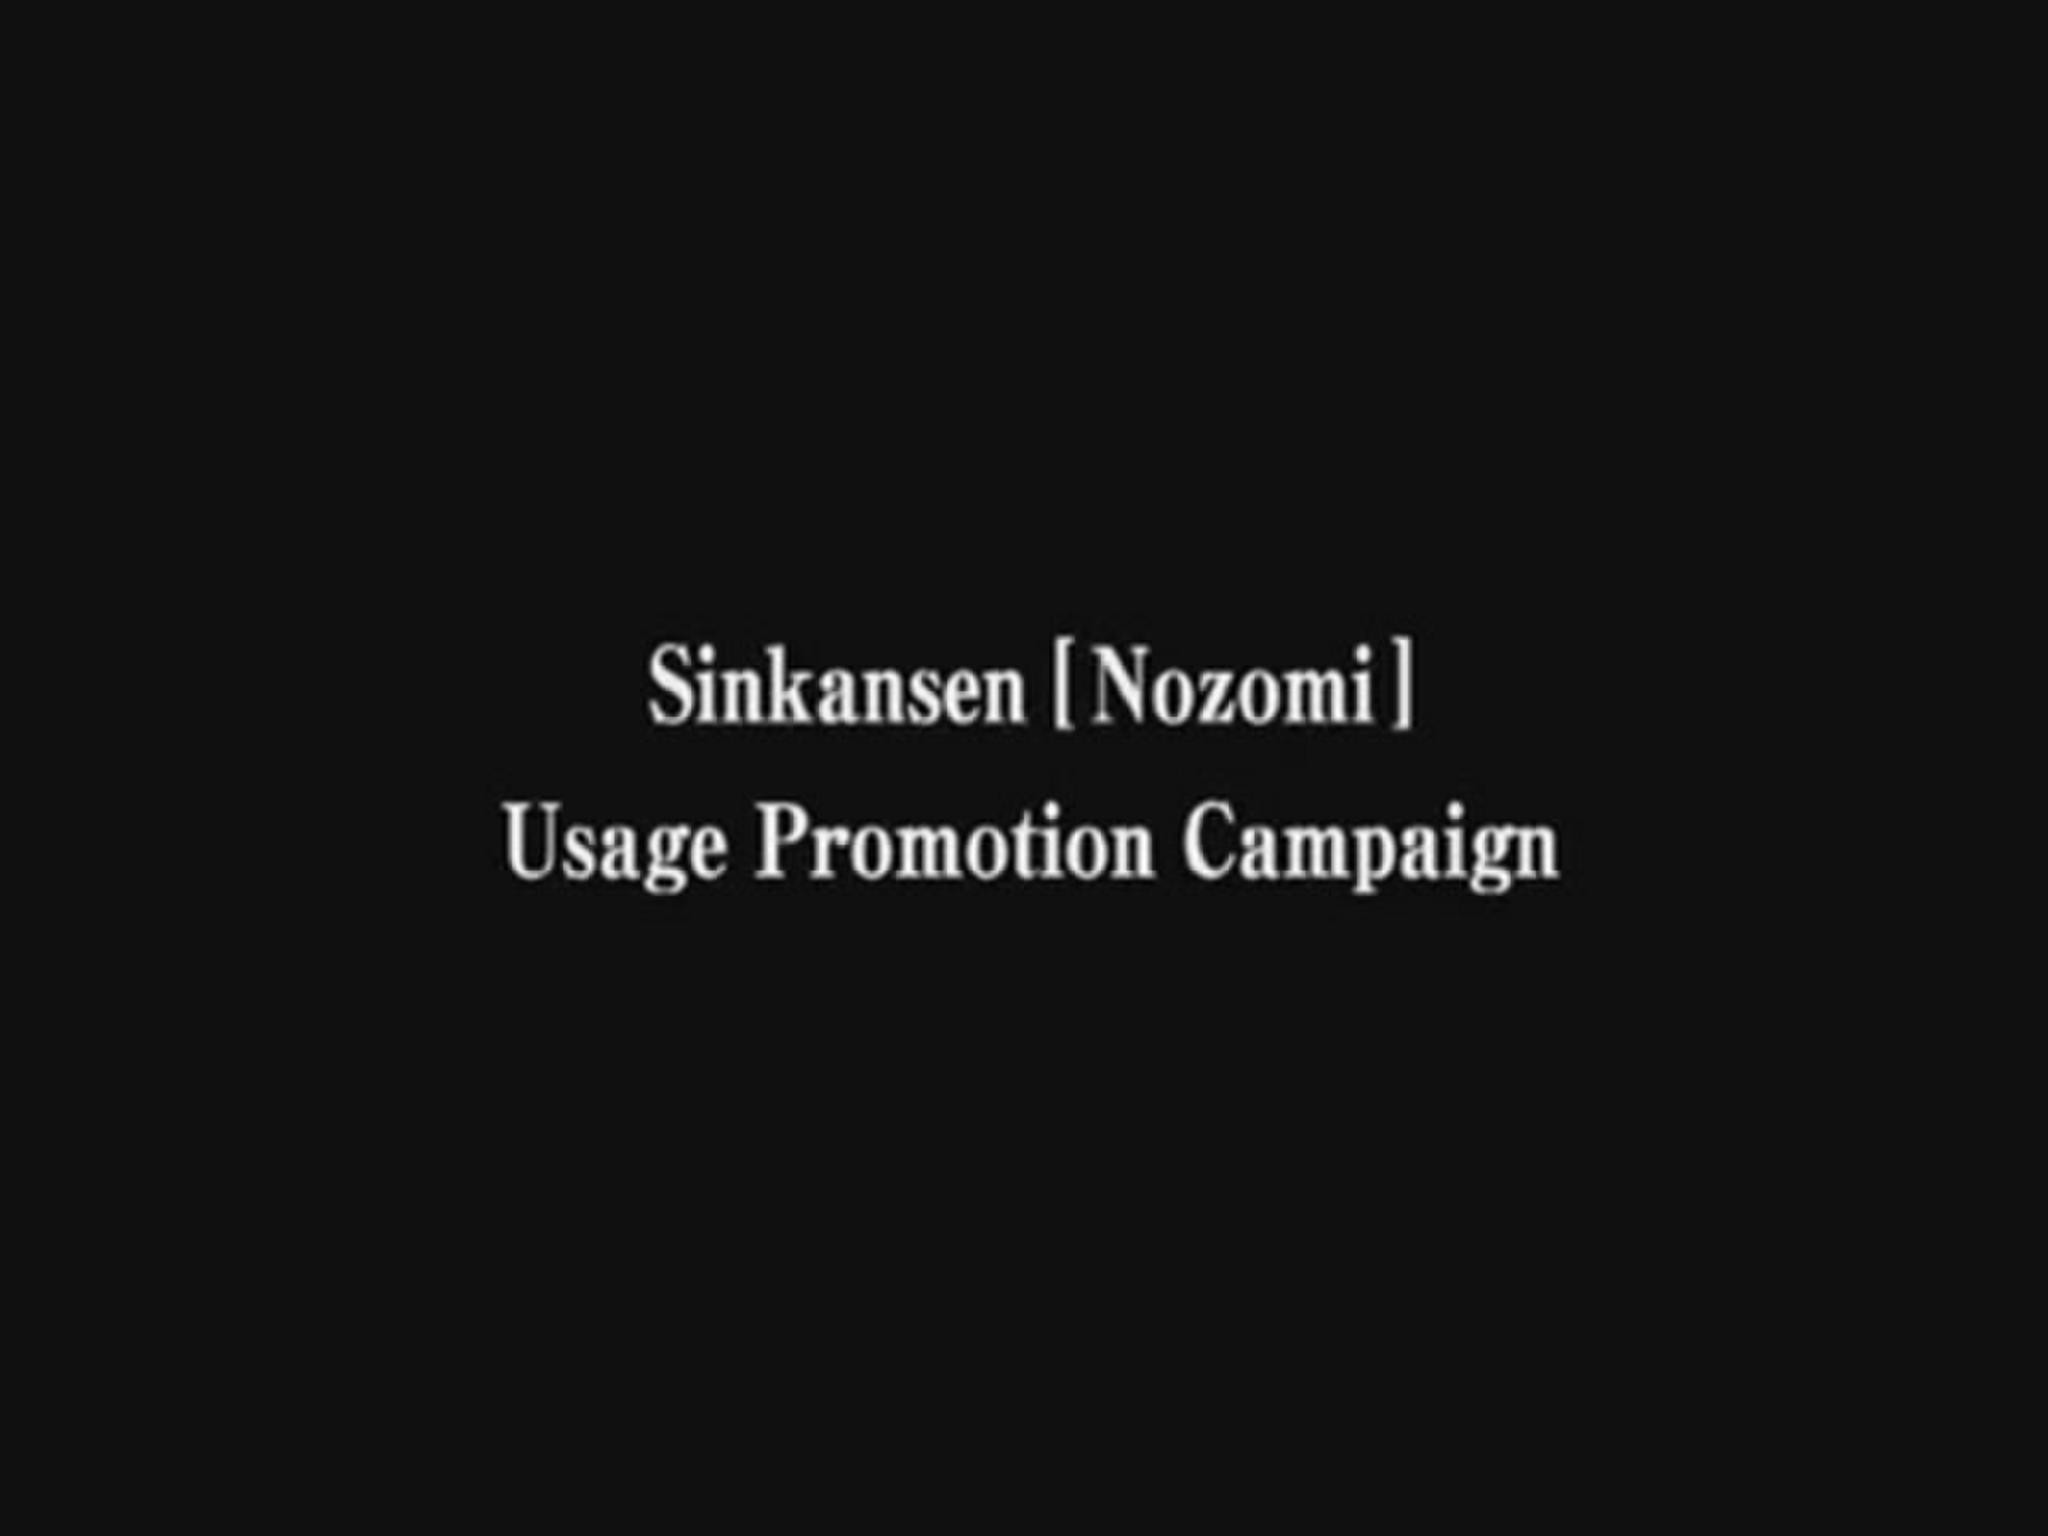 SHINKANSEN (BULLET TRAIN) 'NOZOMI'